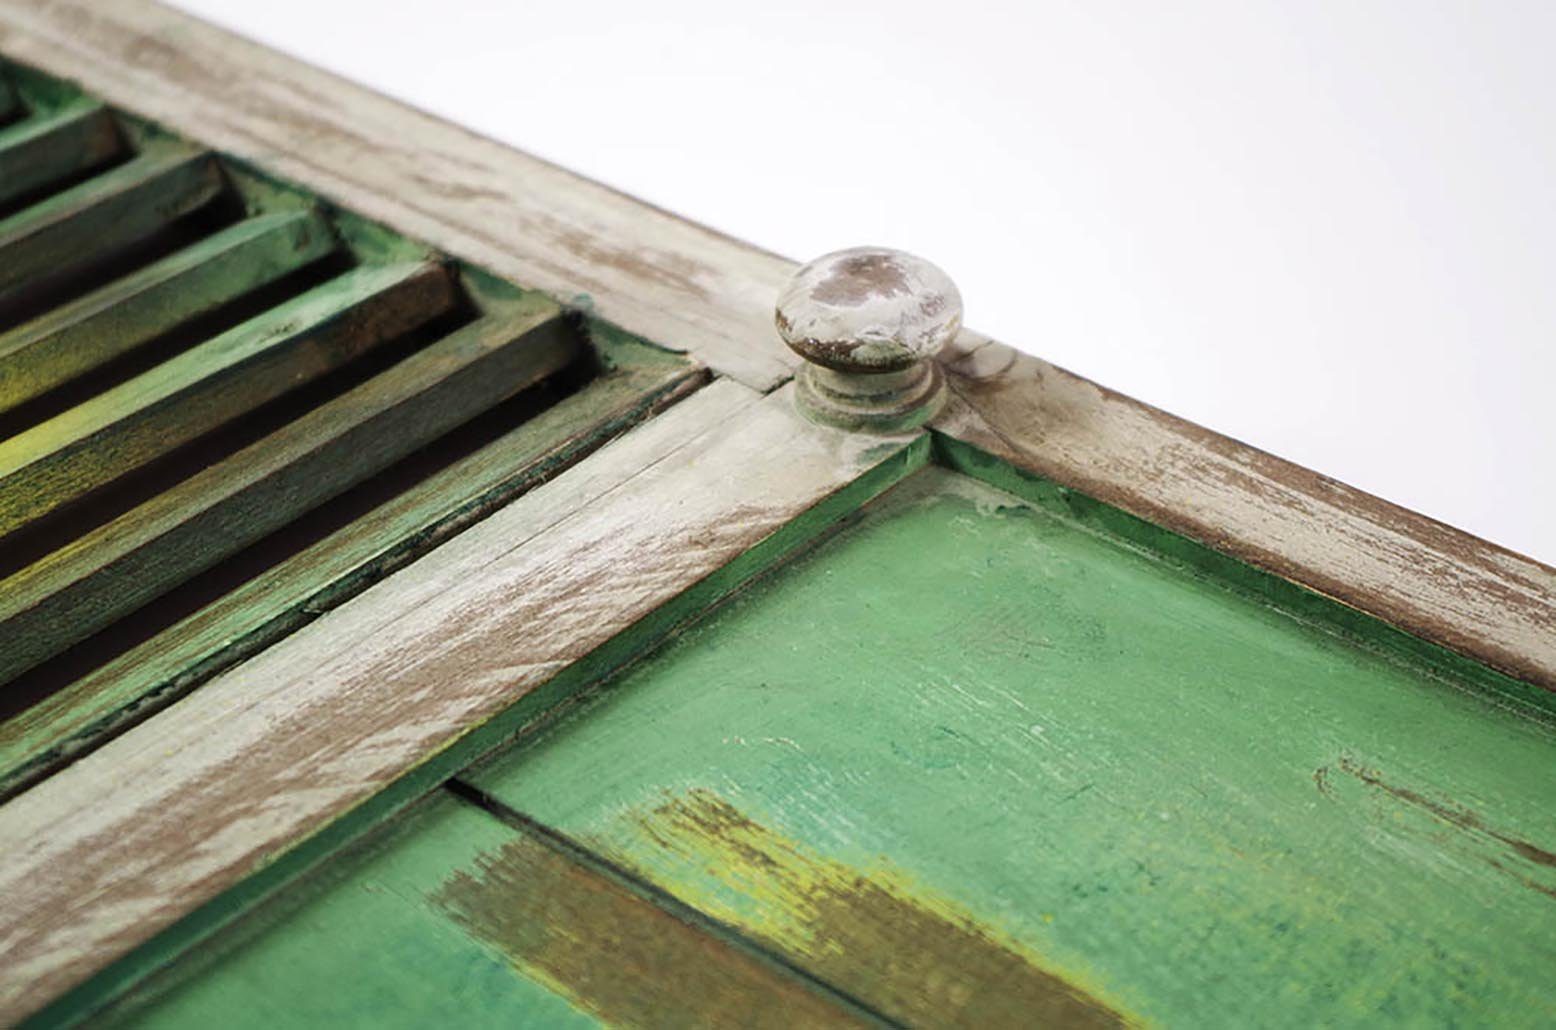 Bunt, Kobolo Dekoobjekt Dekorativer Lamellen aus mit in Fensterladen Holz